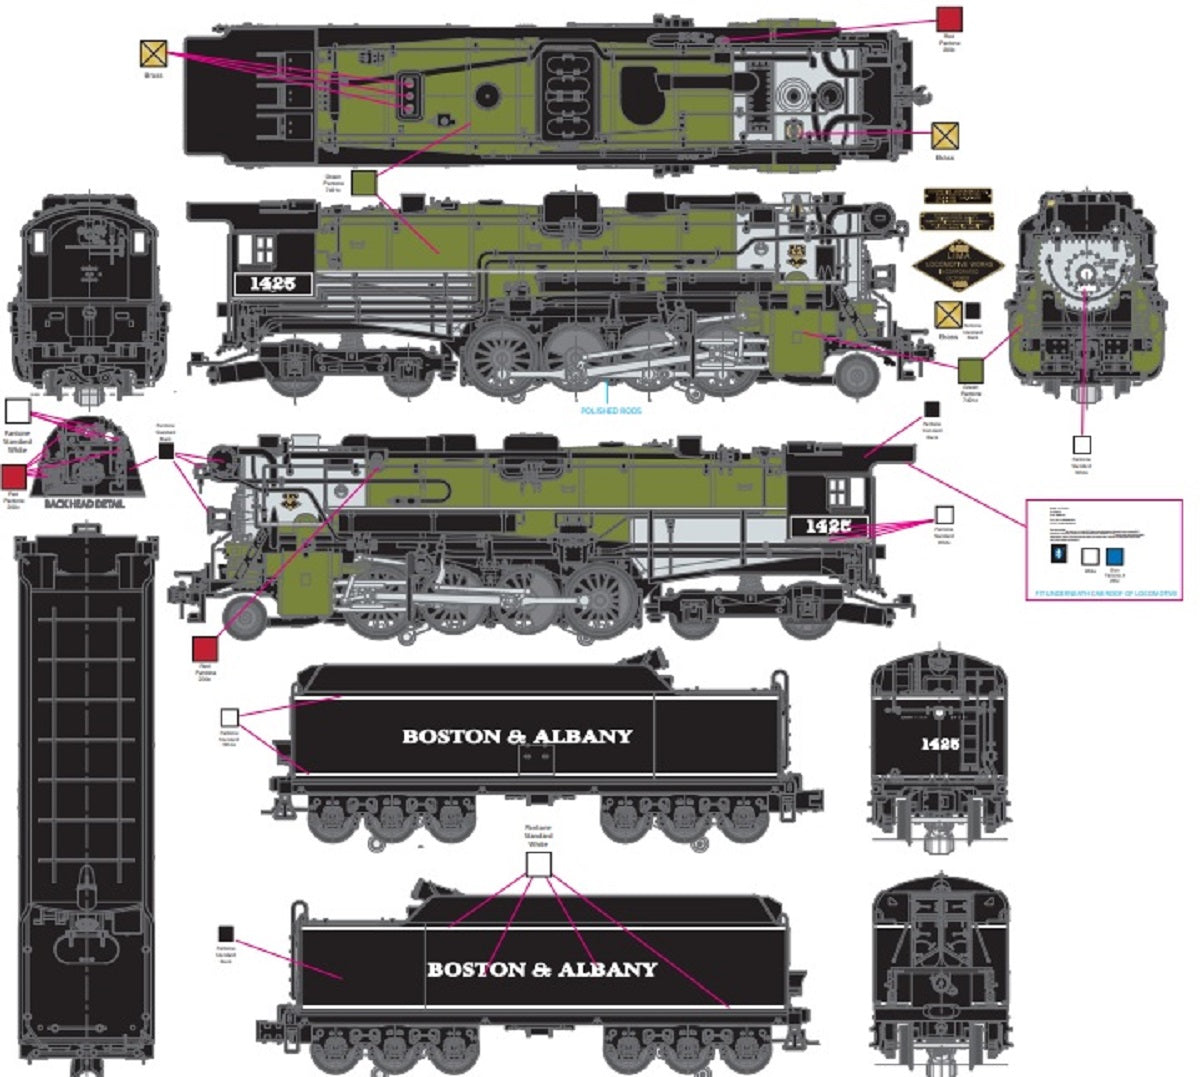 Lionel 2231700 - Legacy A1 Berkshire Steam Locomotive "Boston & Albany" #1425 - Custom Run for MrMuffin'sTrains